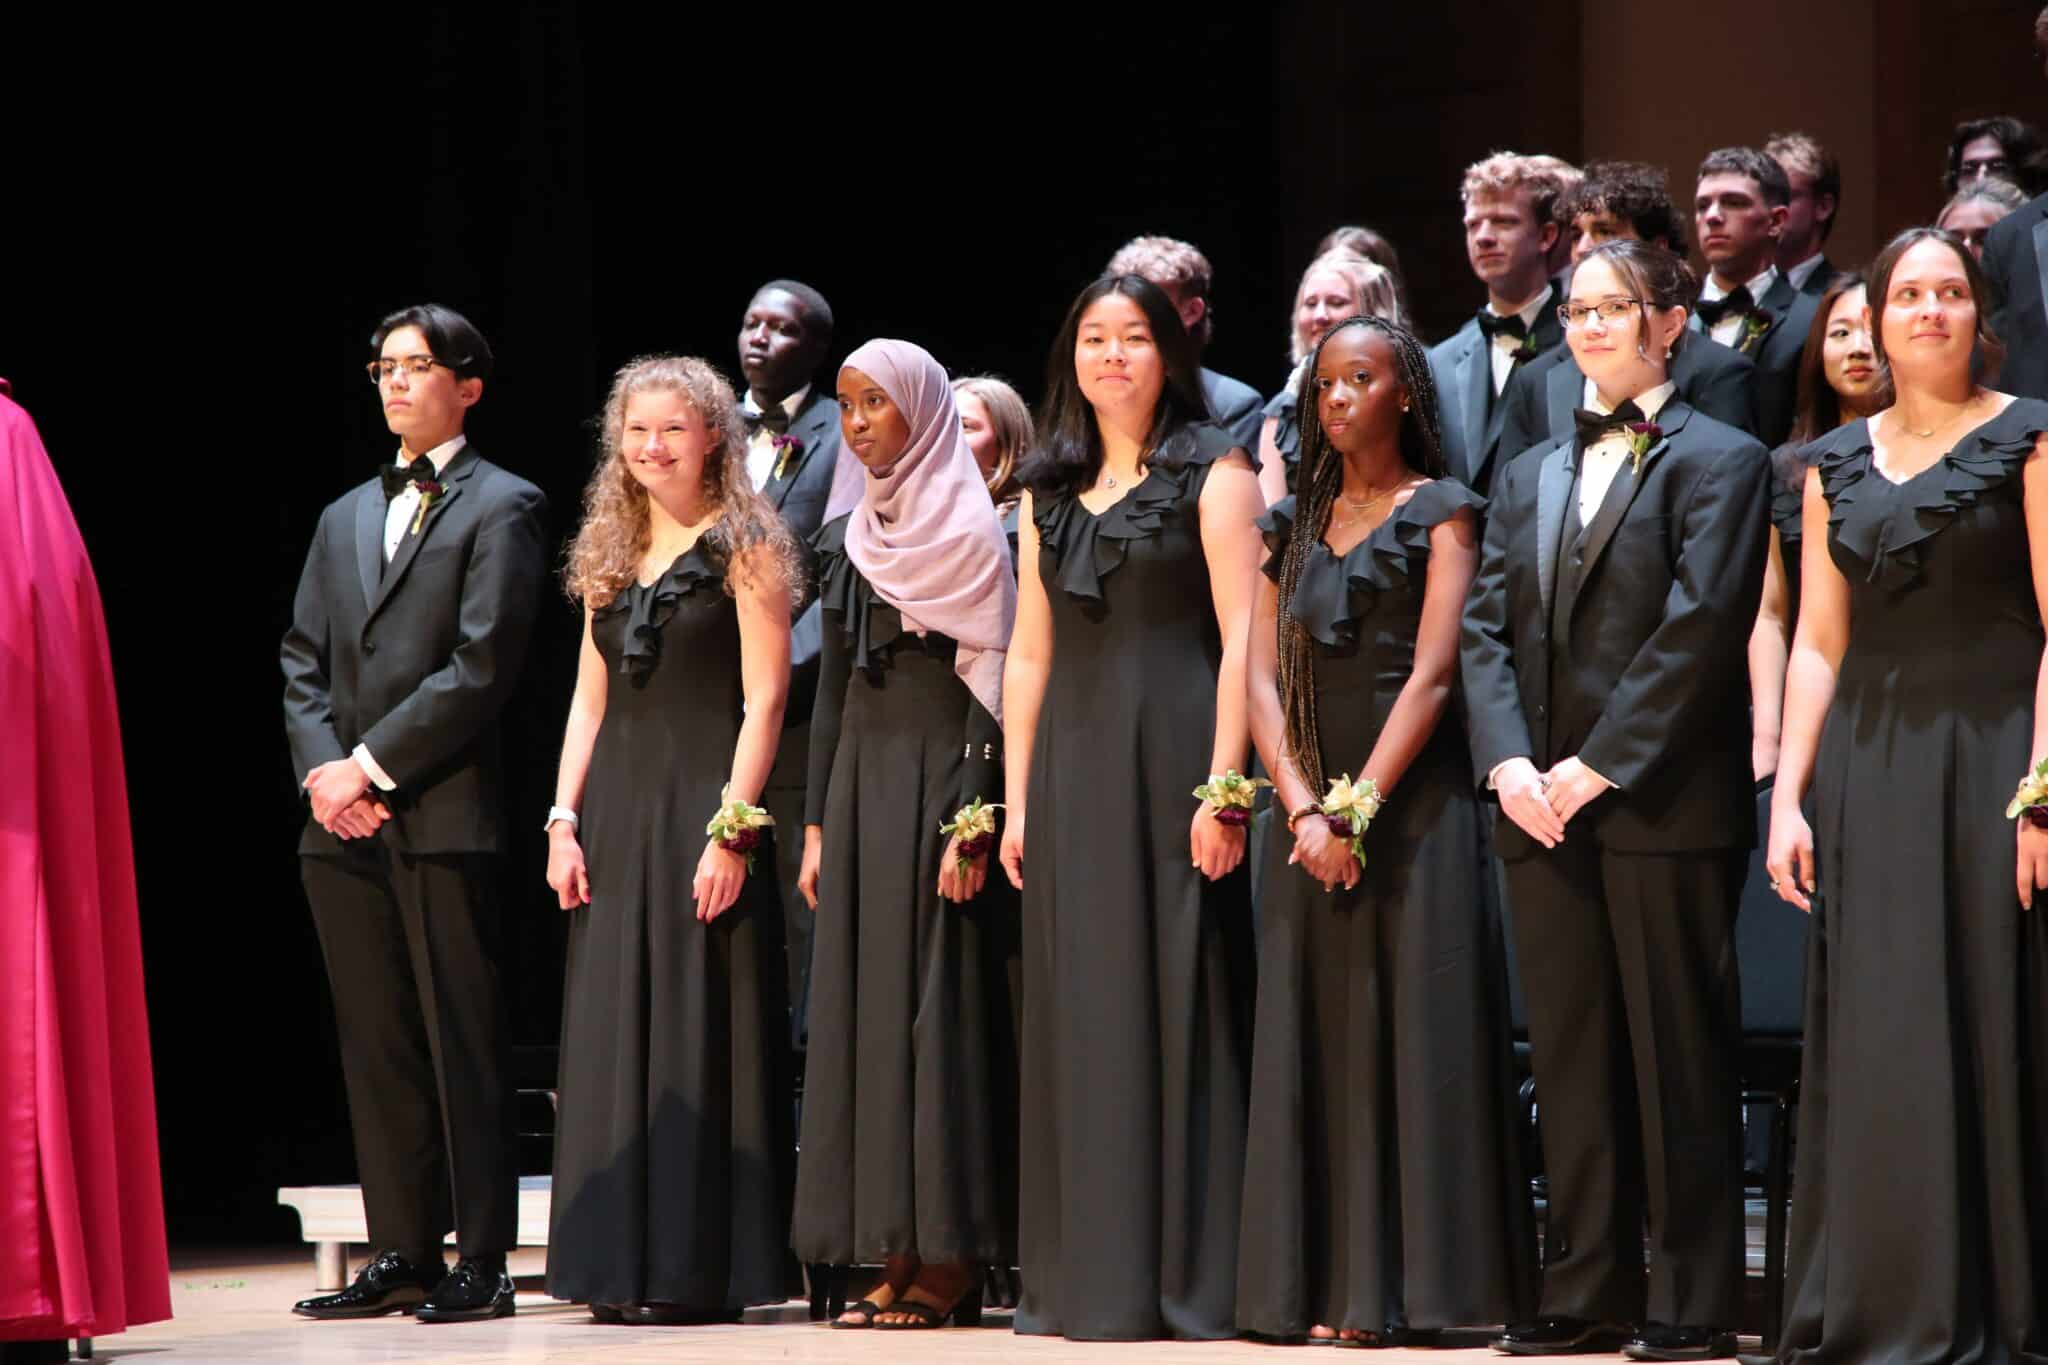 students dressed up at concert wearing black dresses